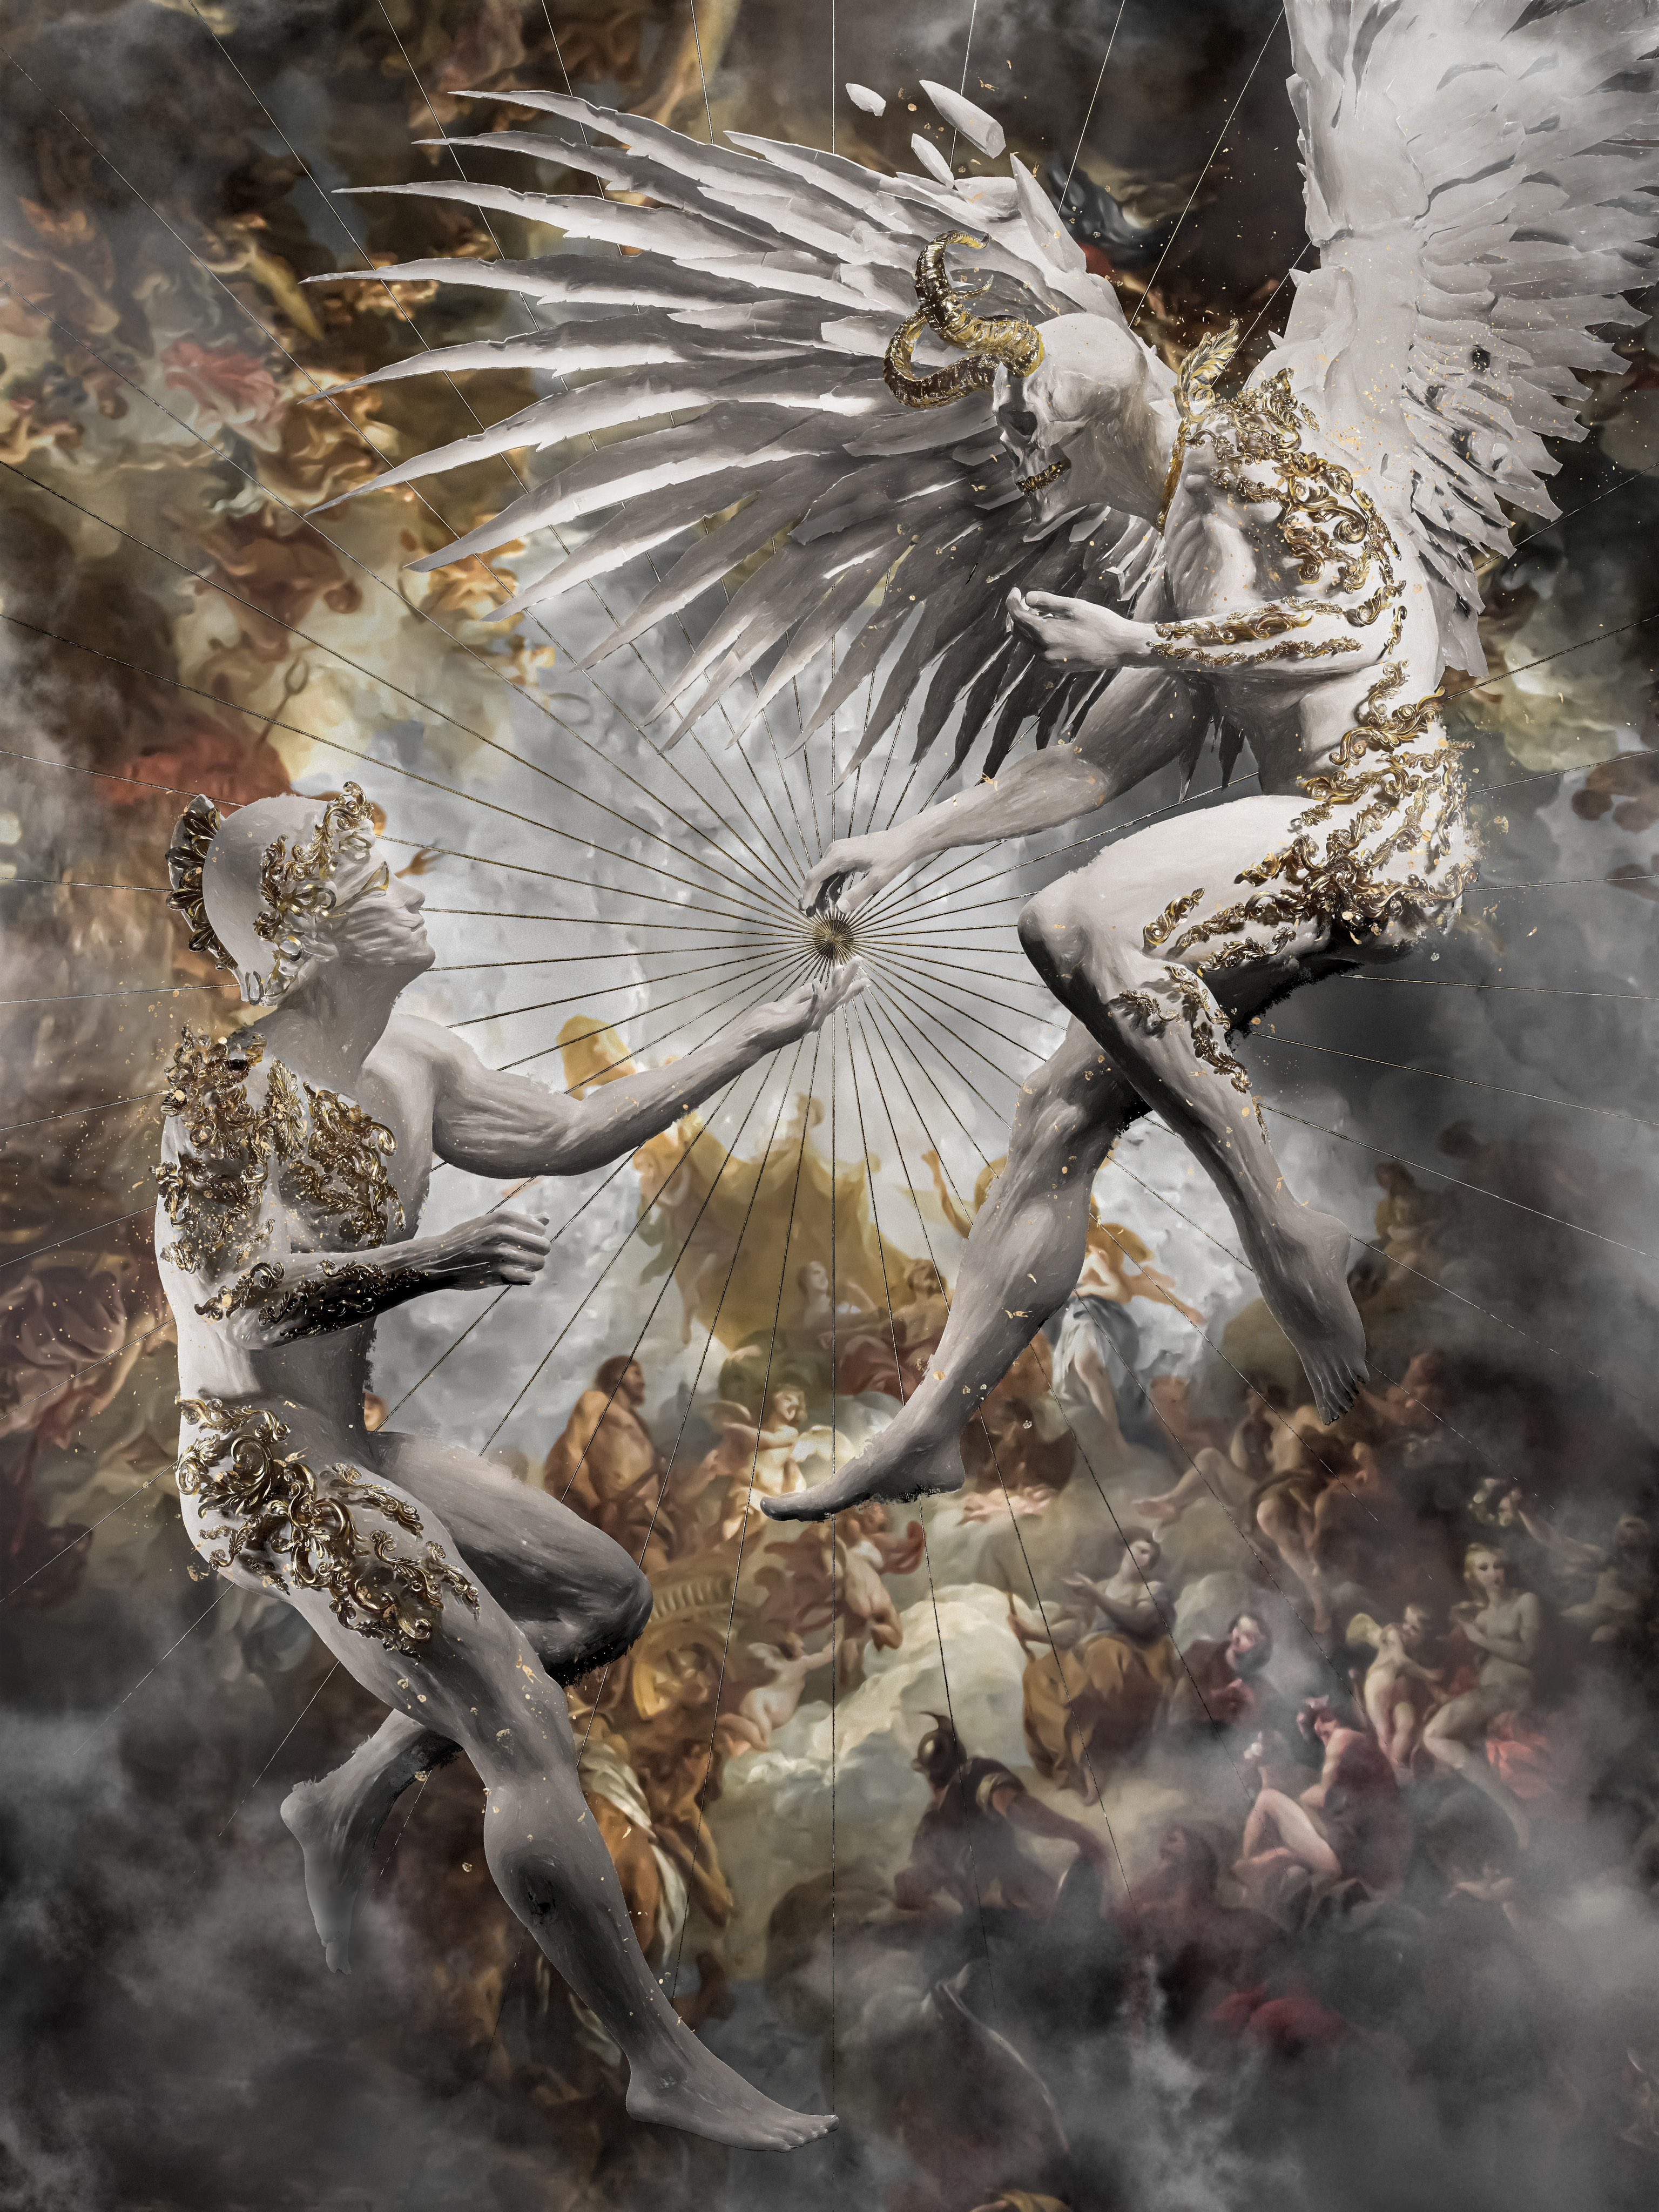 General 3072x4096 muhju Heaven and Hell angel war digital art illustration portrait display wings horns skull